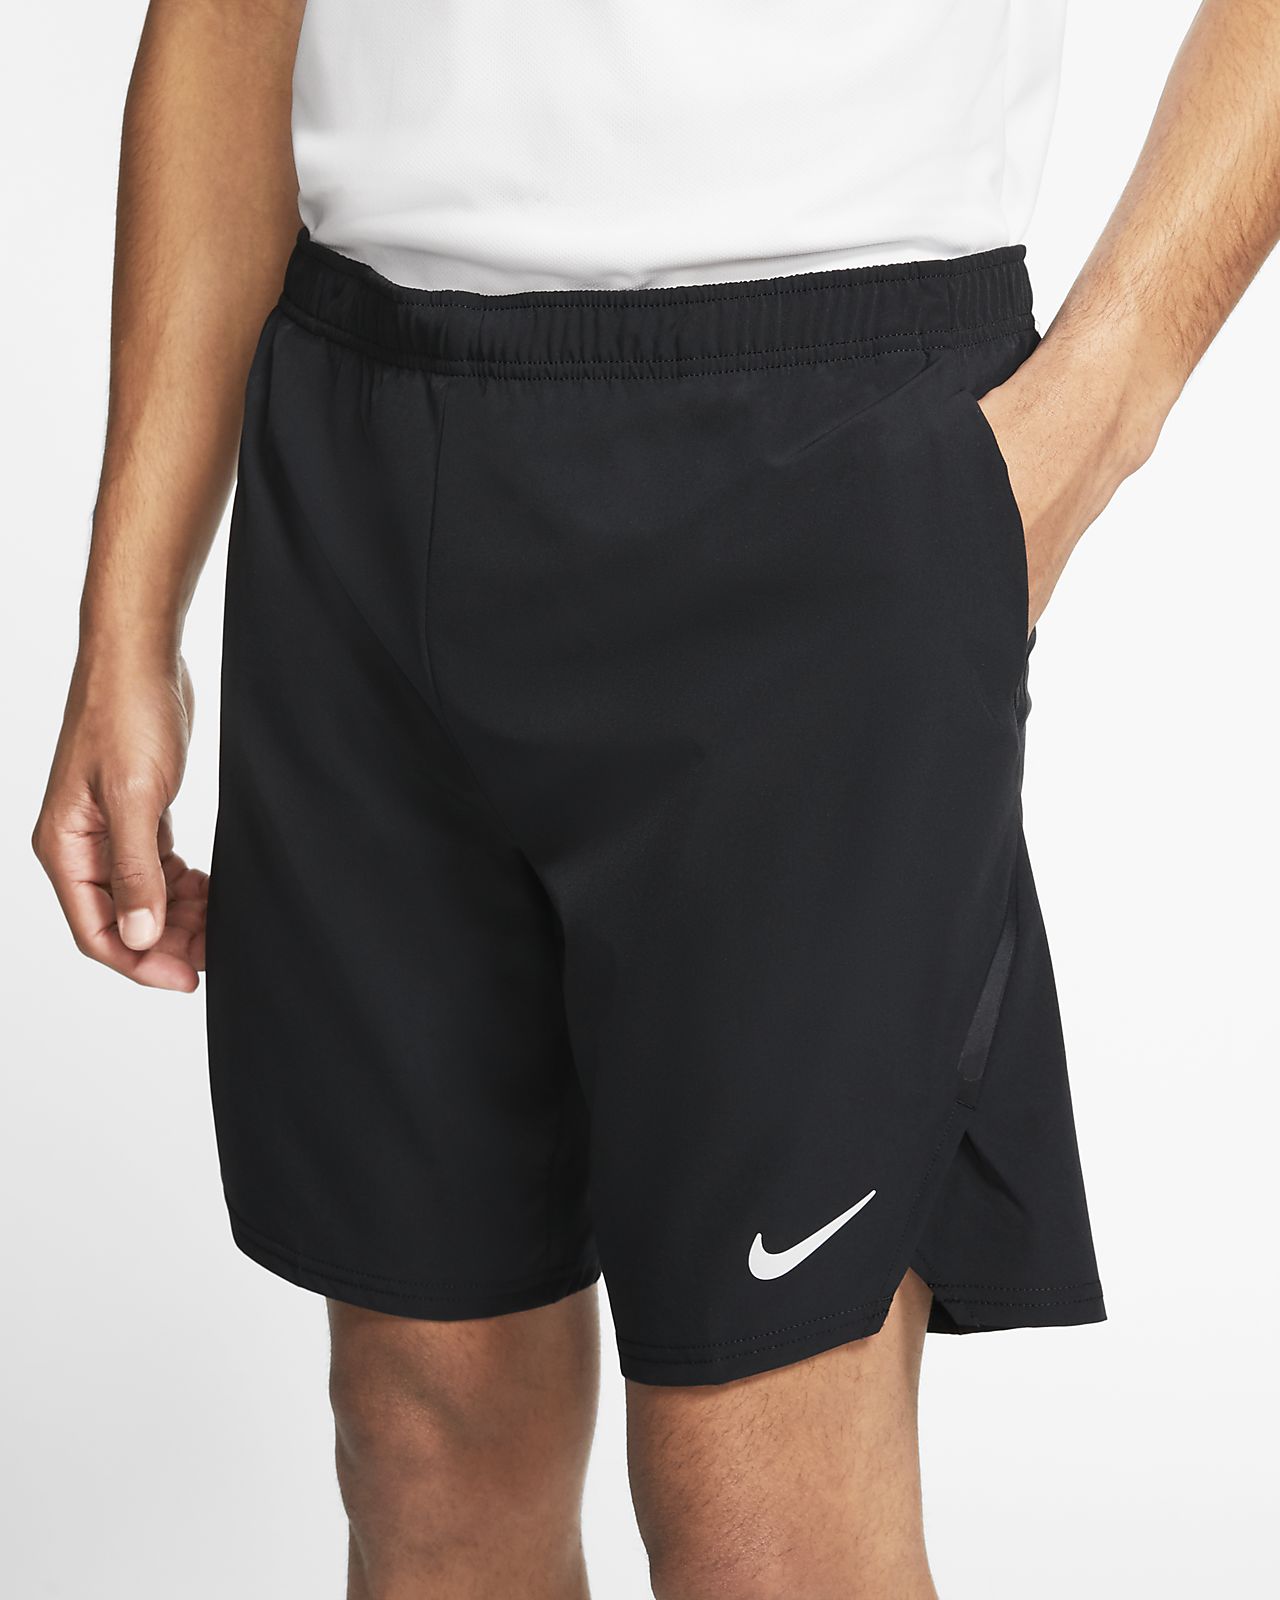 nike flex ace tennis shorts cheap online